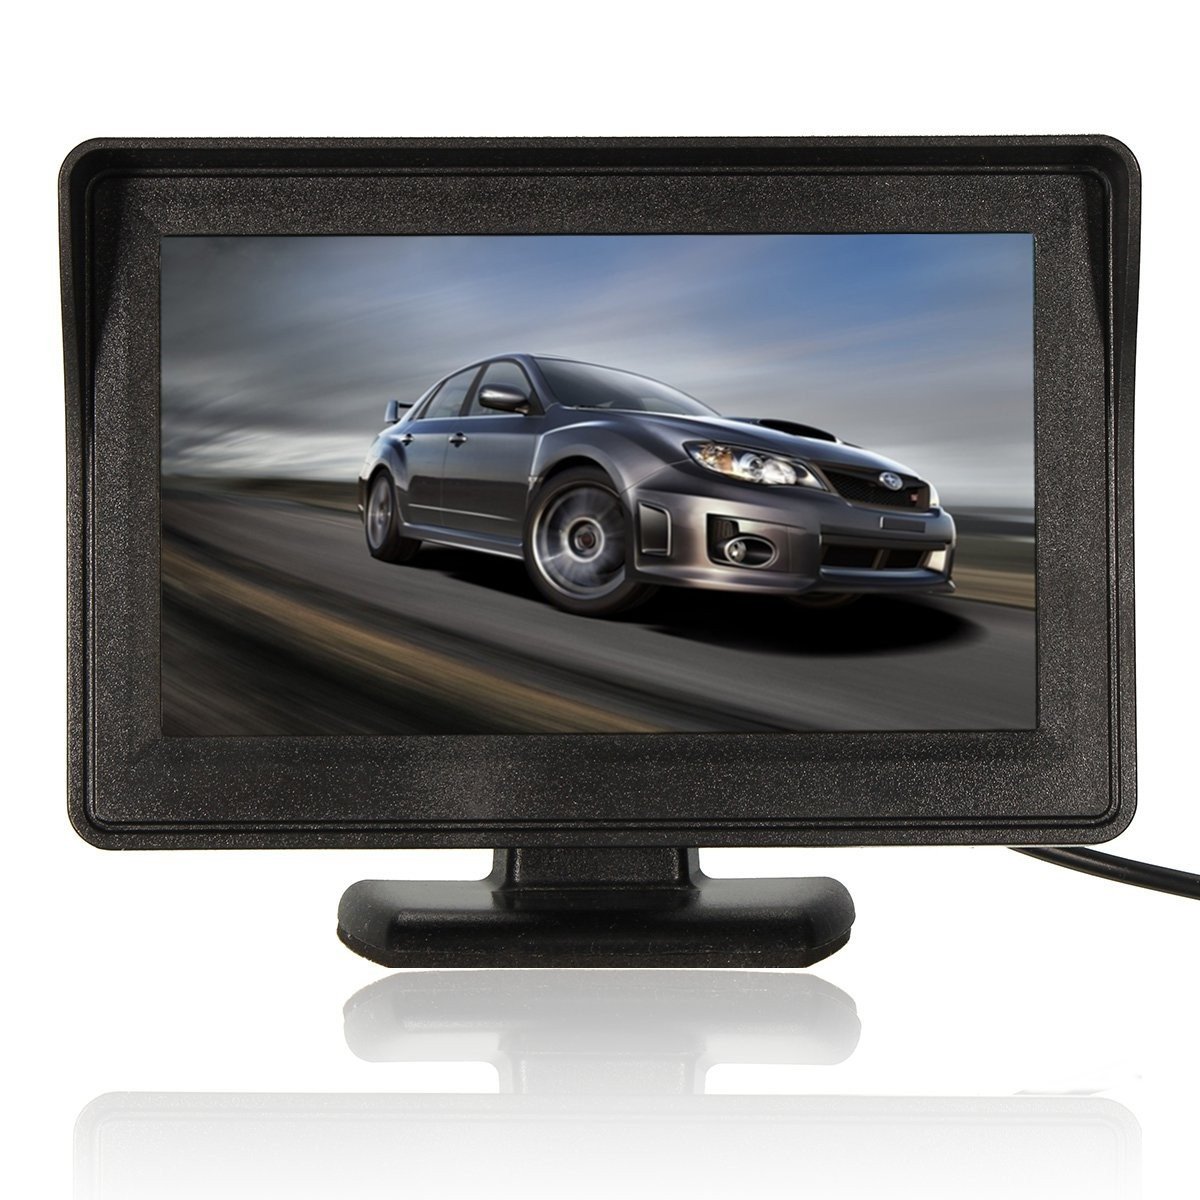 C-FUNN 4,3 Zoll Auto Rücken Kamera Auto Rückansicht Monitor LCD Car Monitor von C-FUNN